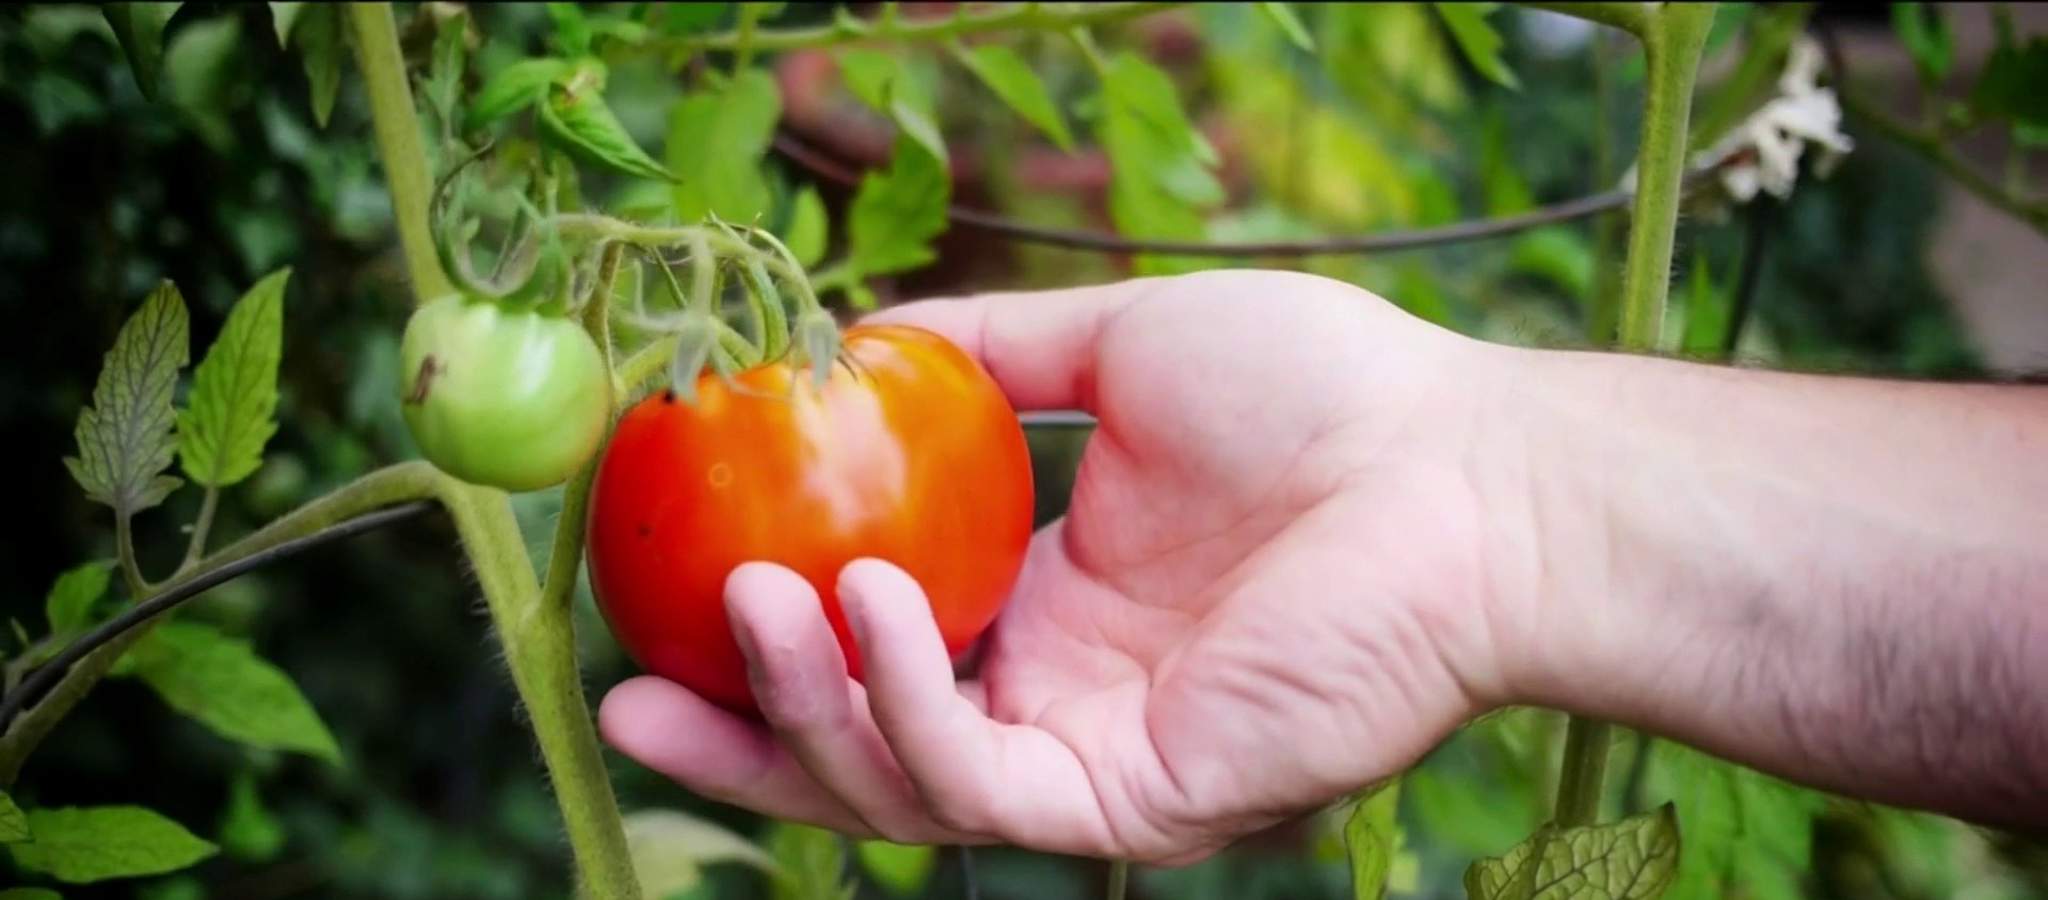 Spring Gardening Tips: 5 ingredients for growing big tomatoes